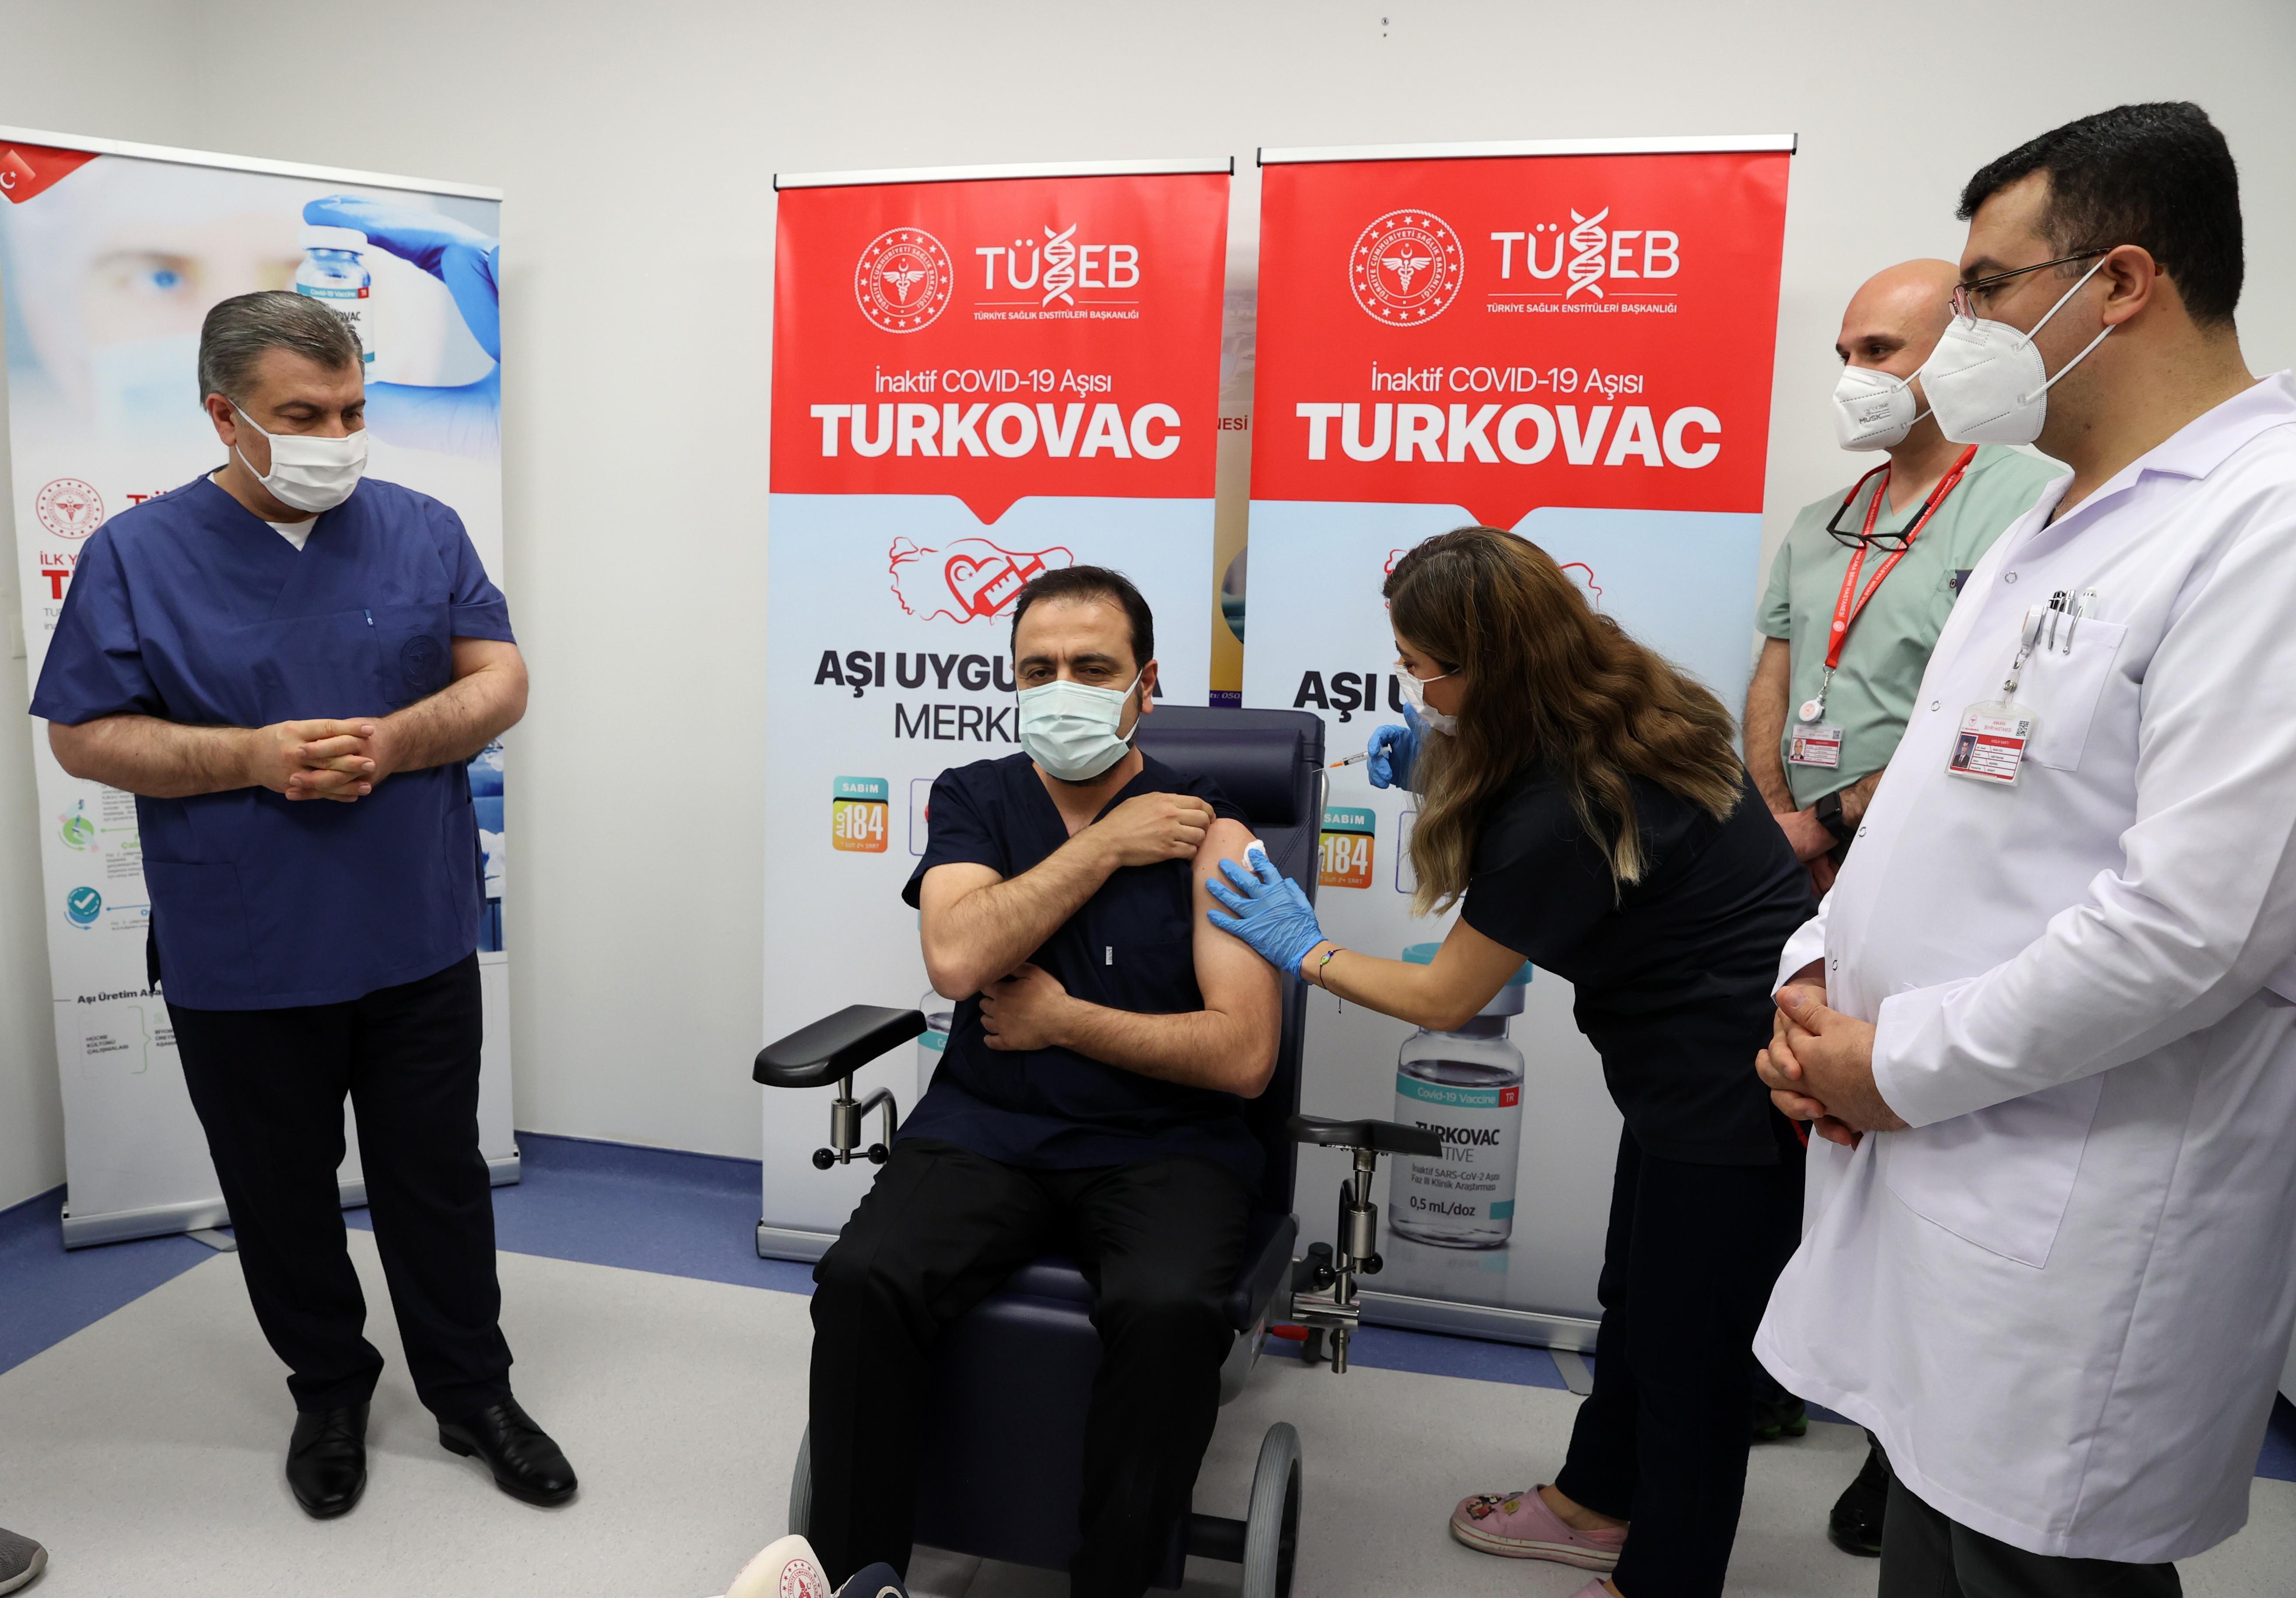 Son dakika: E-Nabızda TURKOVAC aşı randevuları başladı